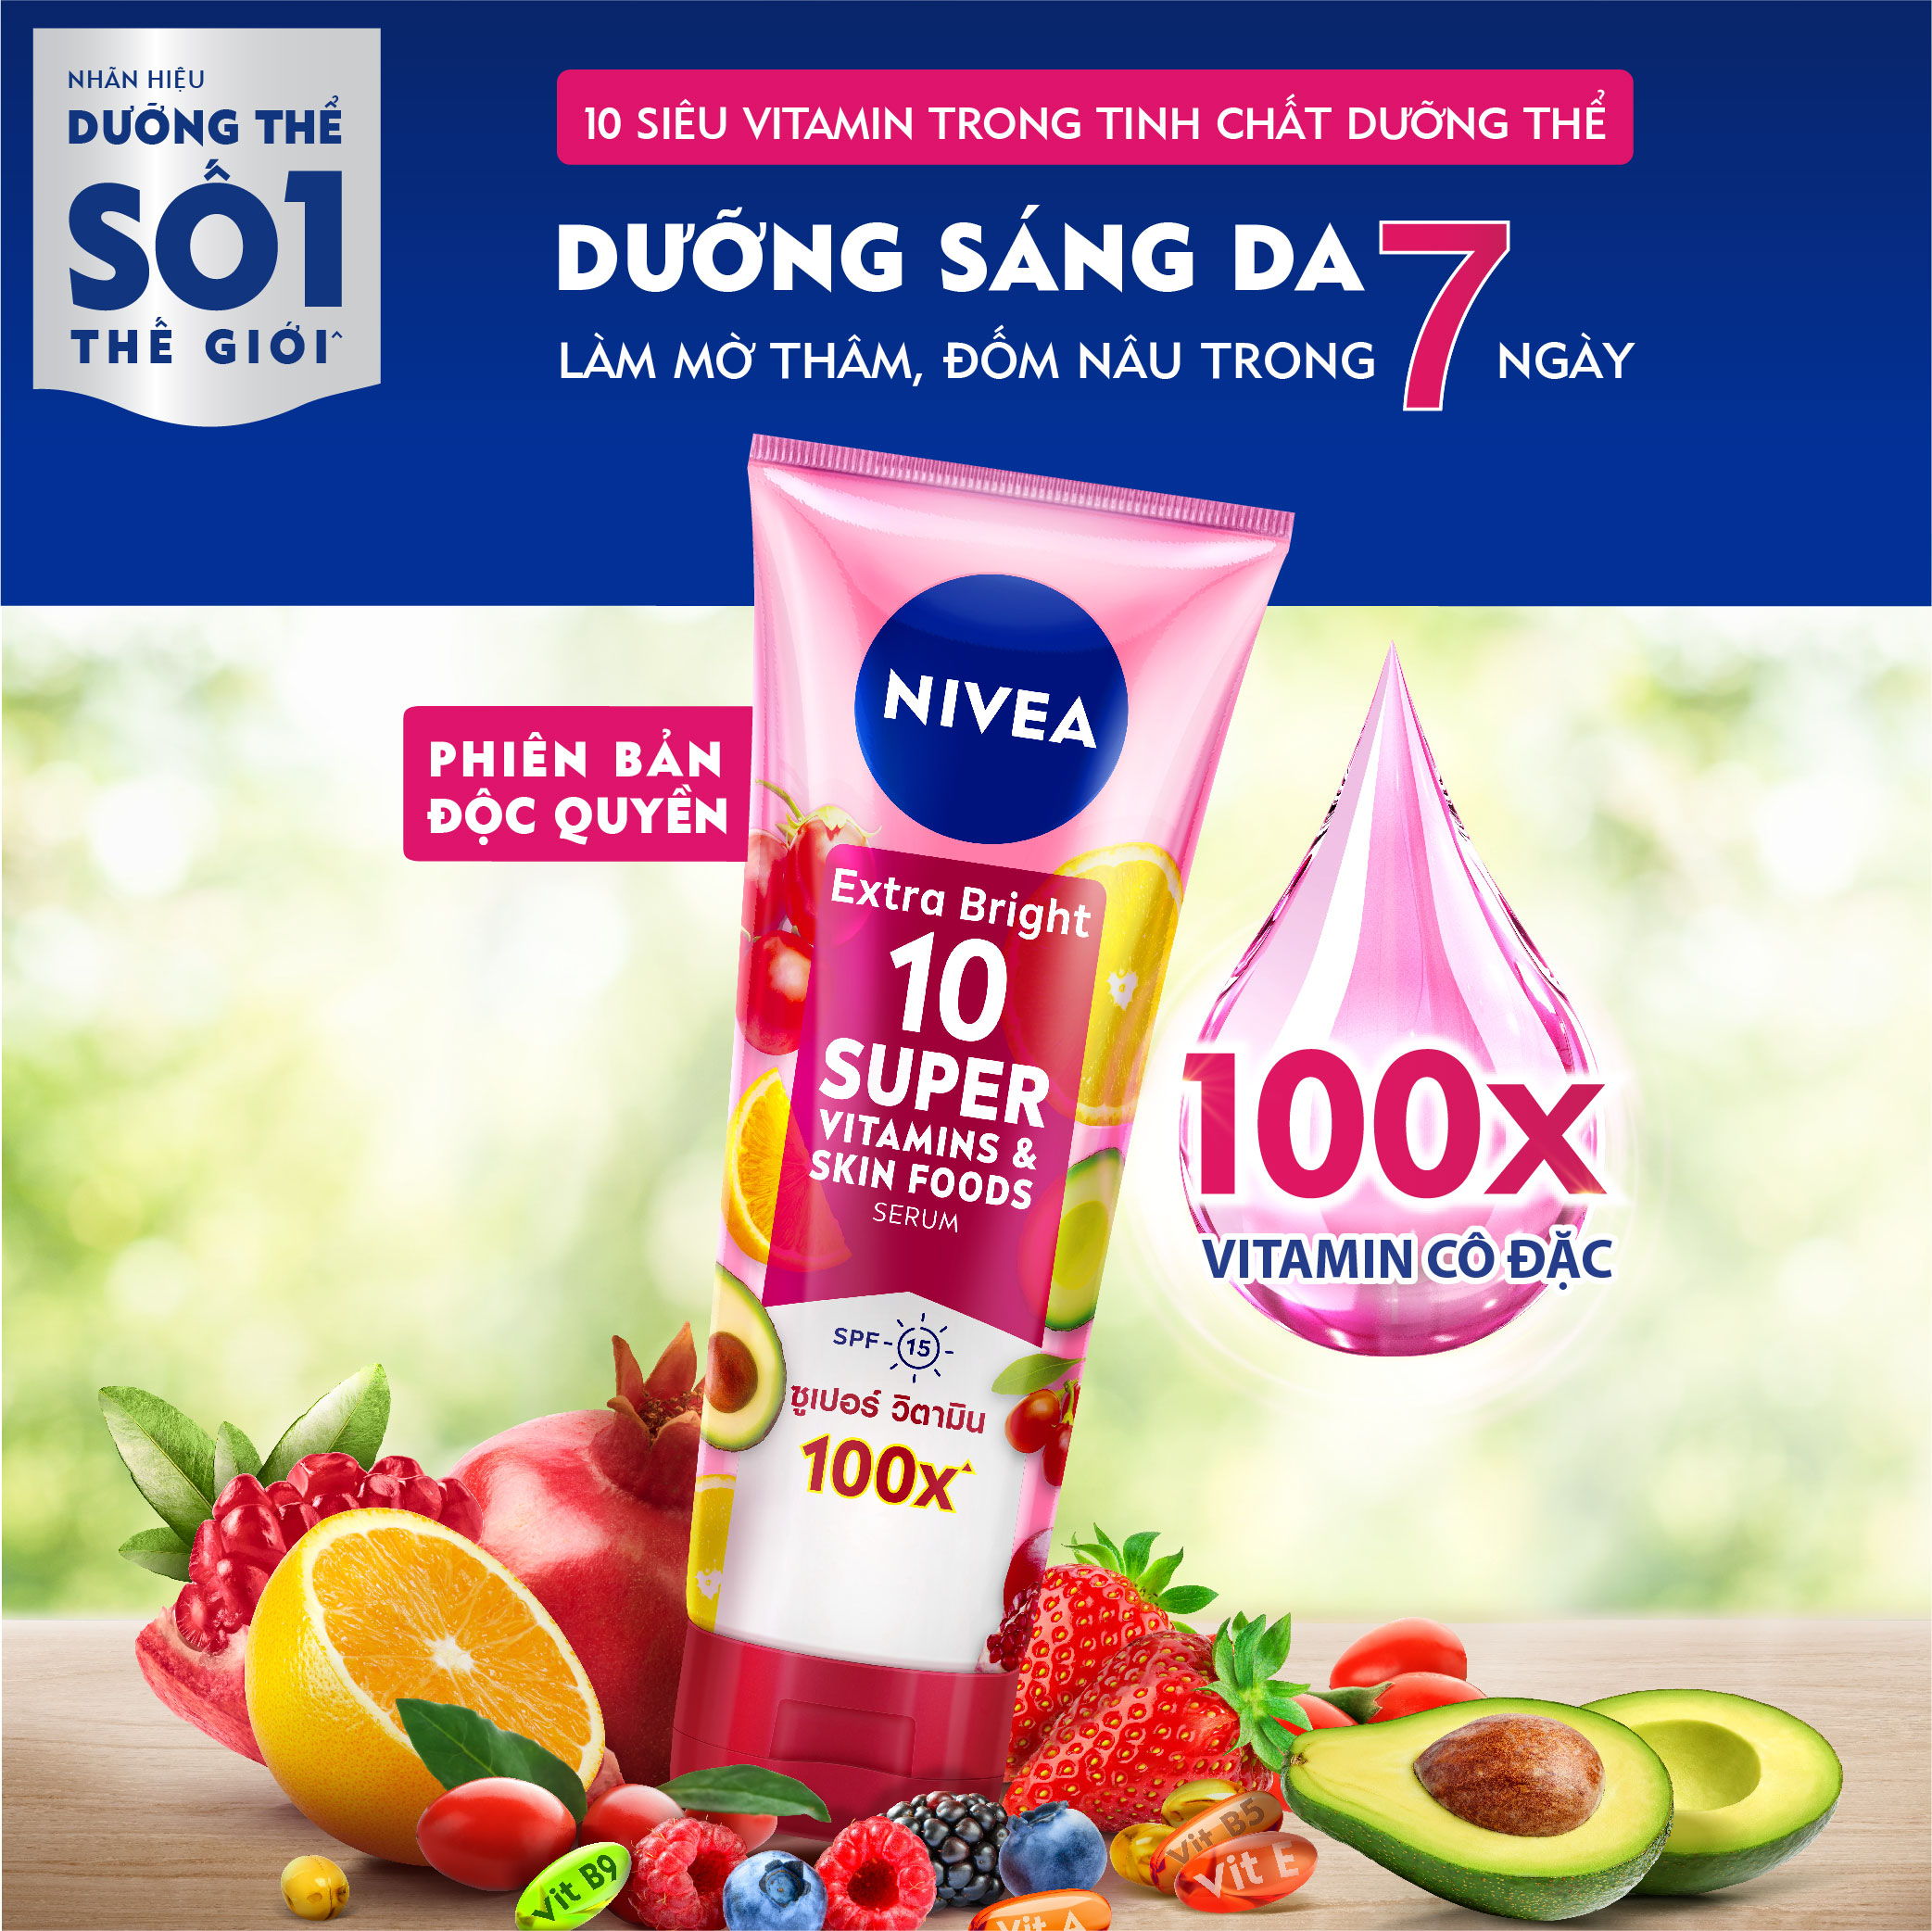 Tinh Chất Dưỡng Thể Nivea Sáng Da Extra Bright 10 Super Vitamin &amp; Skin Foods Serum SPF15 180ml